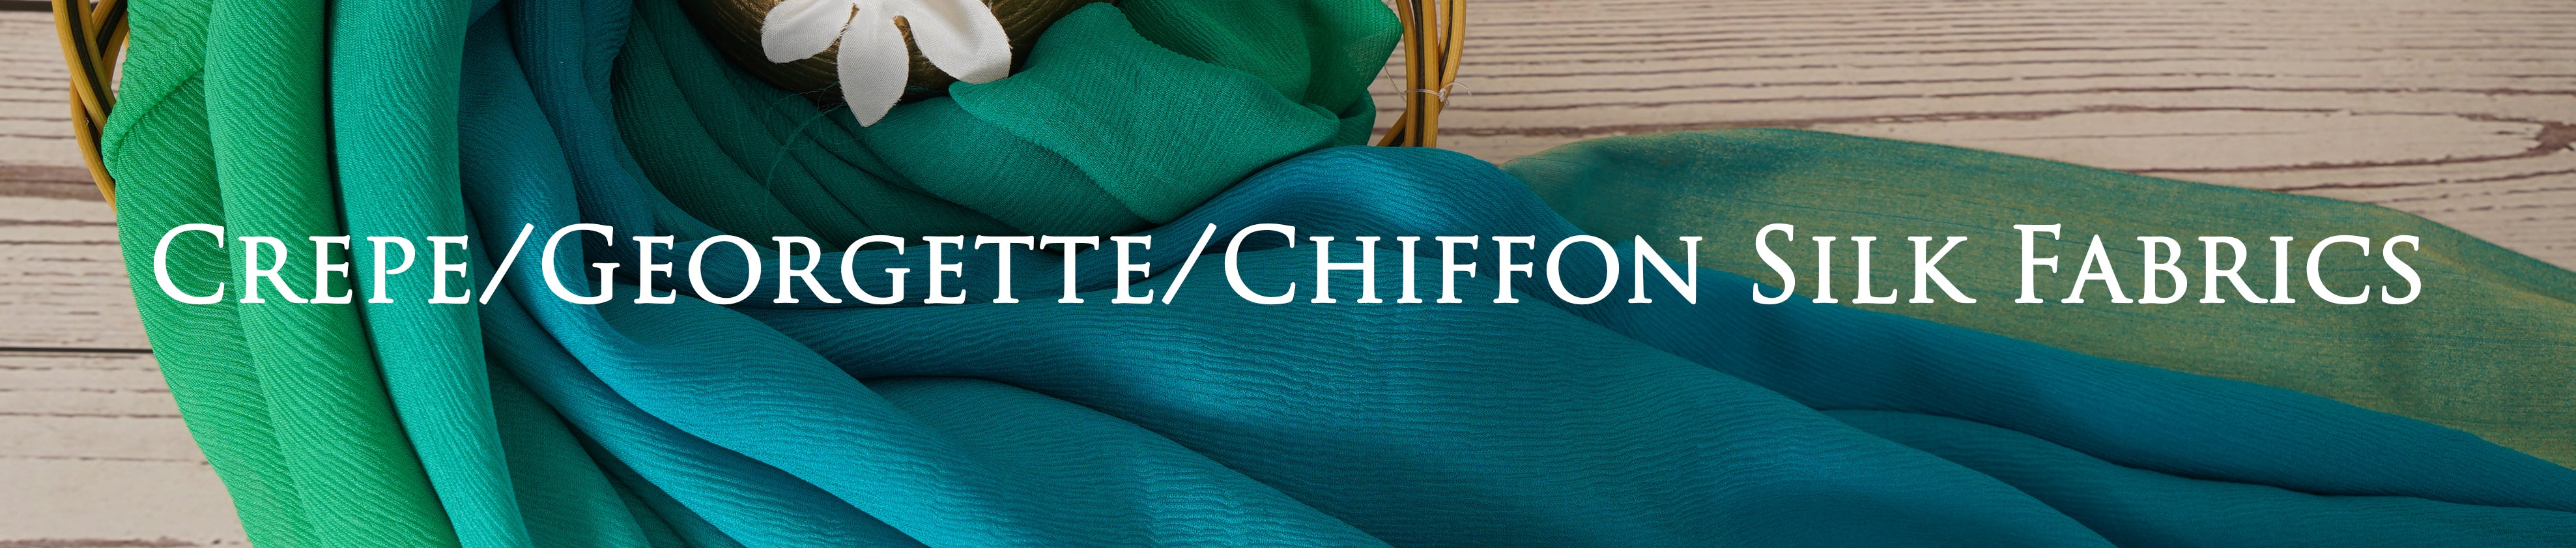 Crepe/Georgette/Chiffon Silk Fabrics